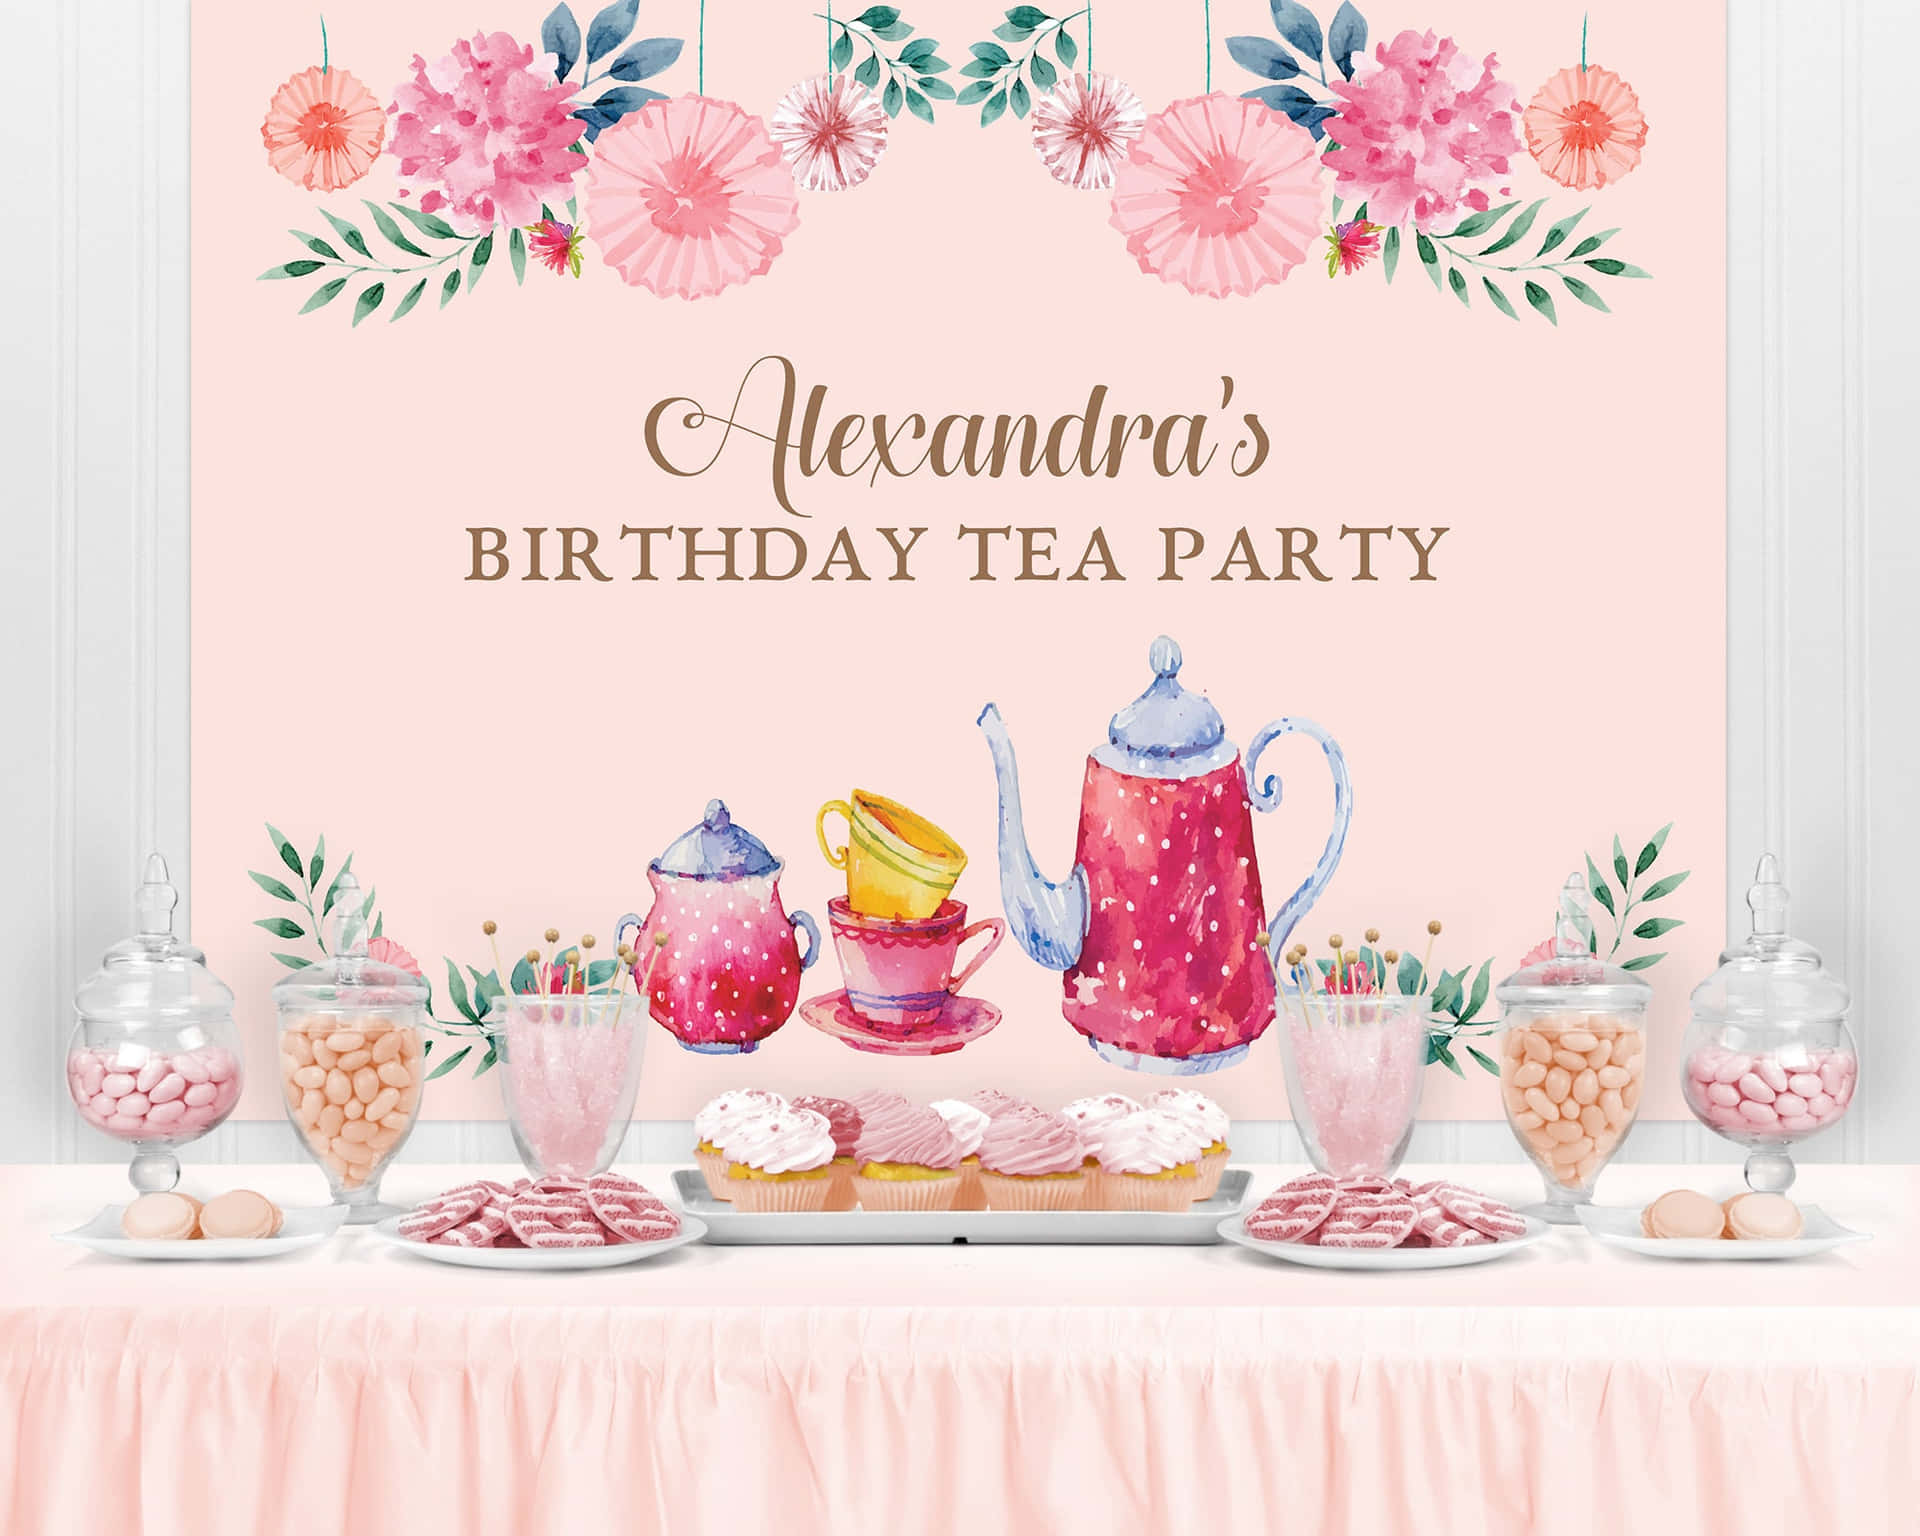 Enjoy food, friends, and tea at a classic Tea Party.